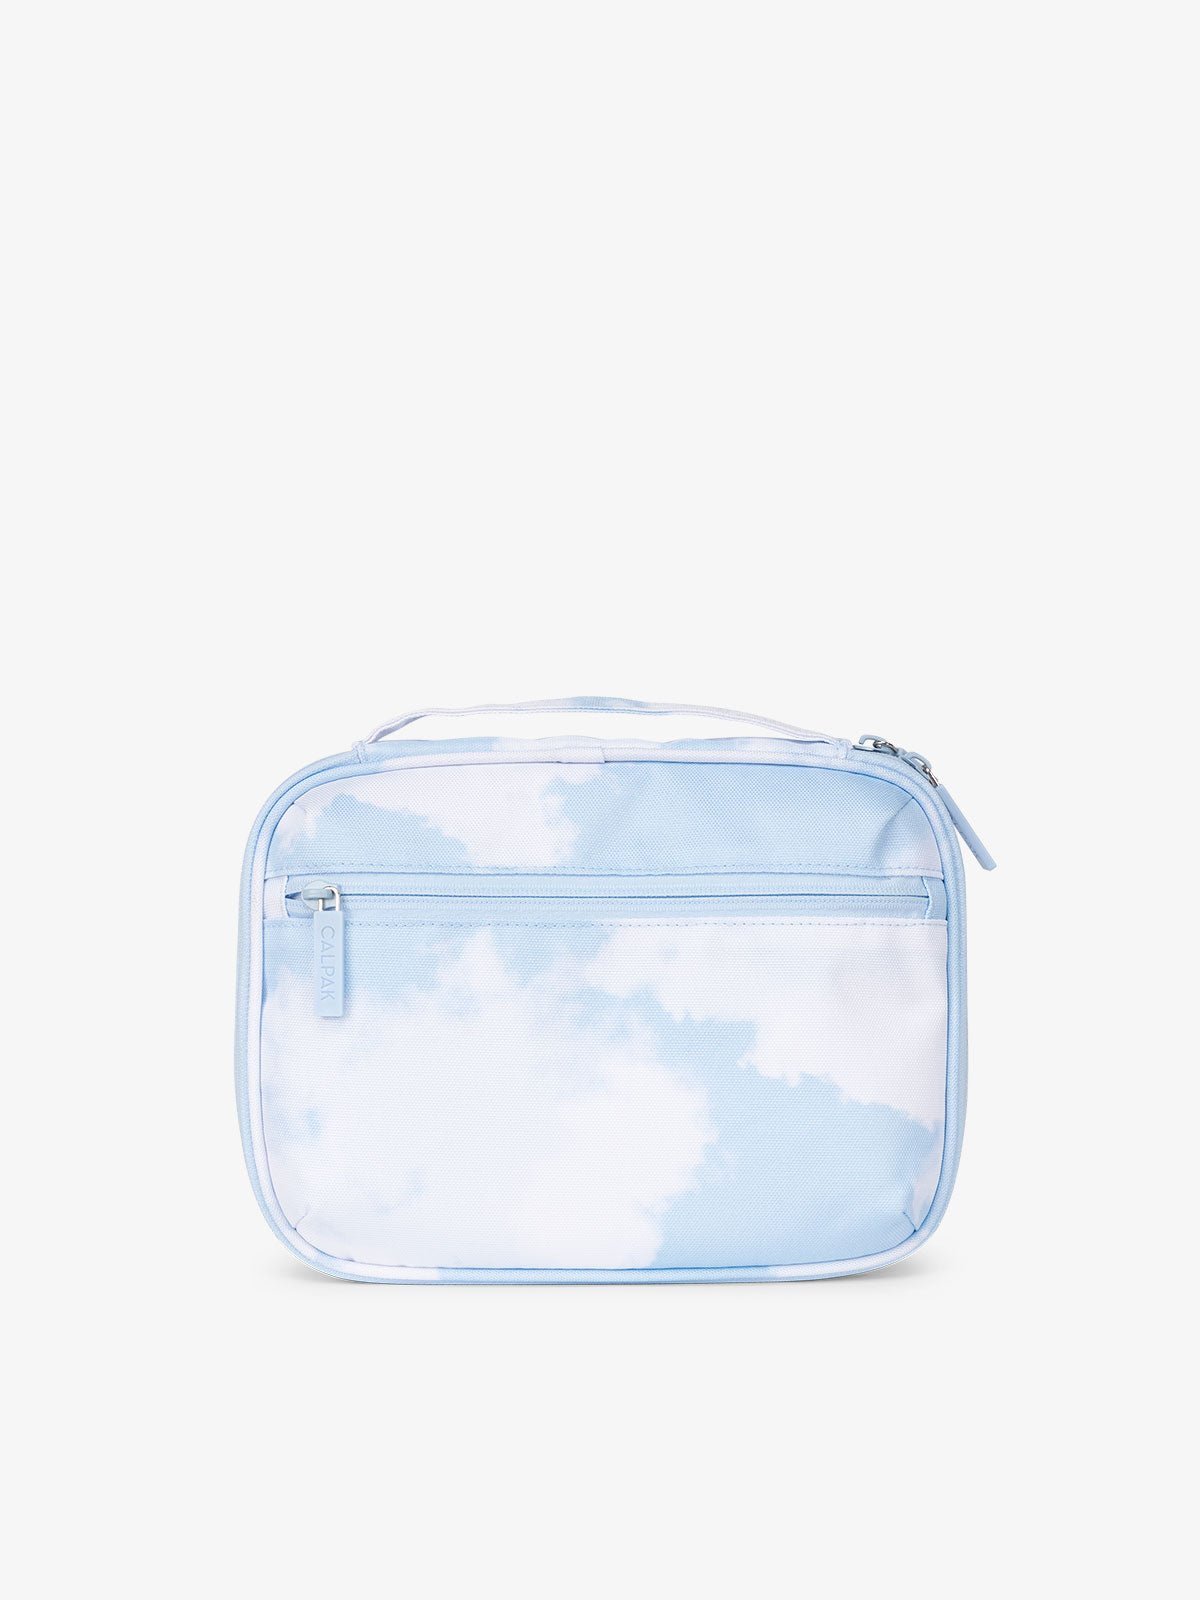 CALPAK tech case and electronics bag in cloud